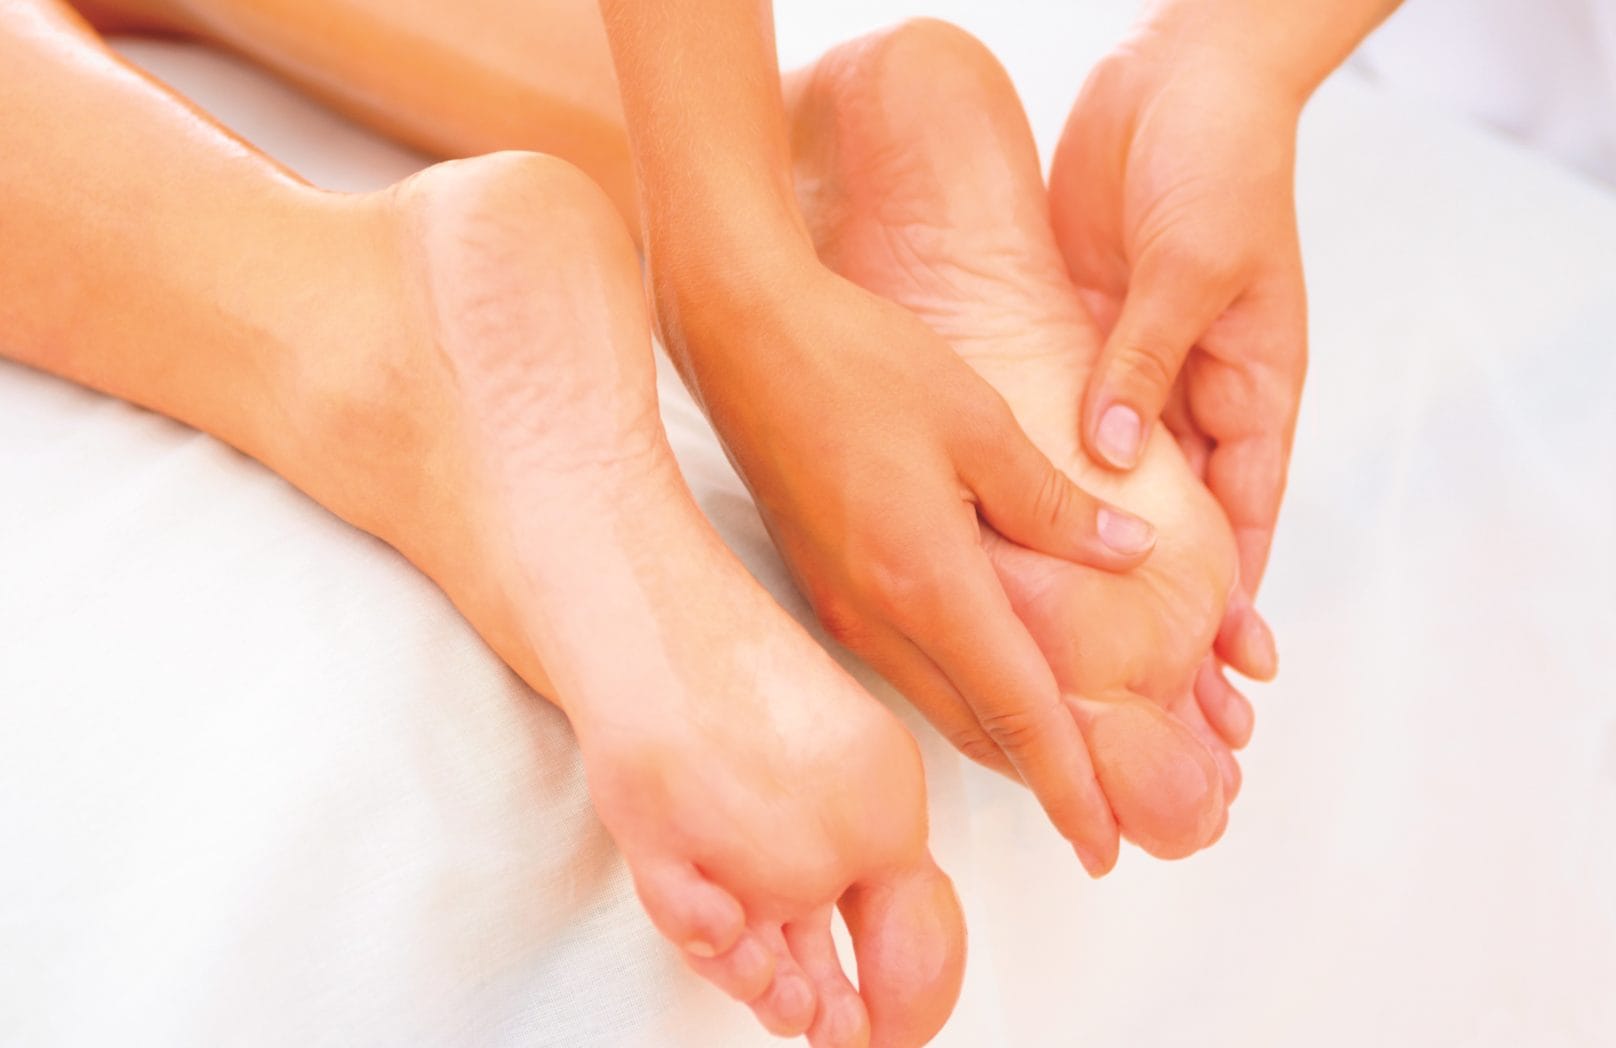 Foot Massage Spa